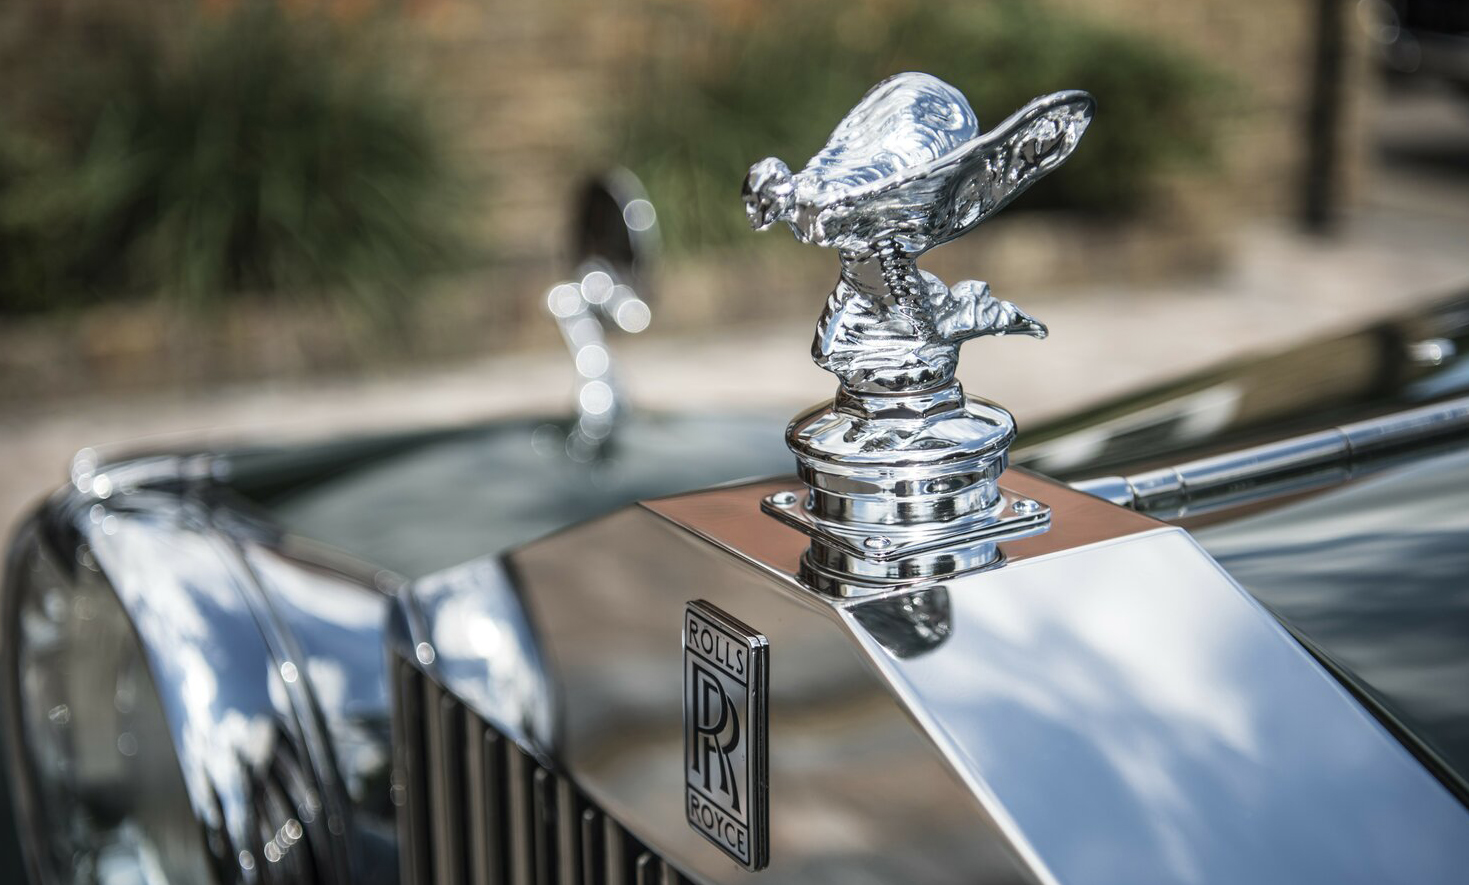 Rolls-Royce Phantom IV - SoyMotor.com